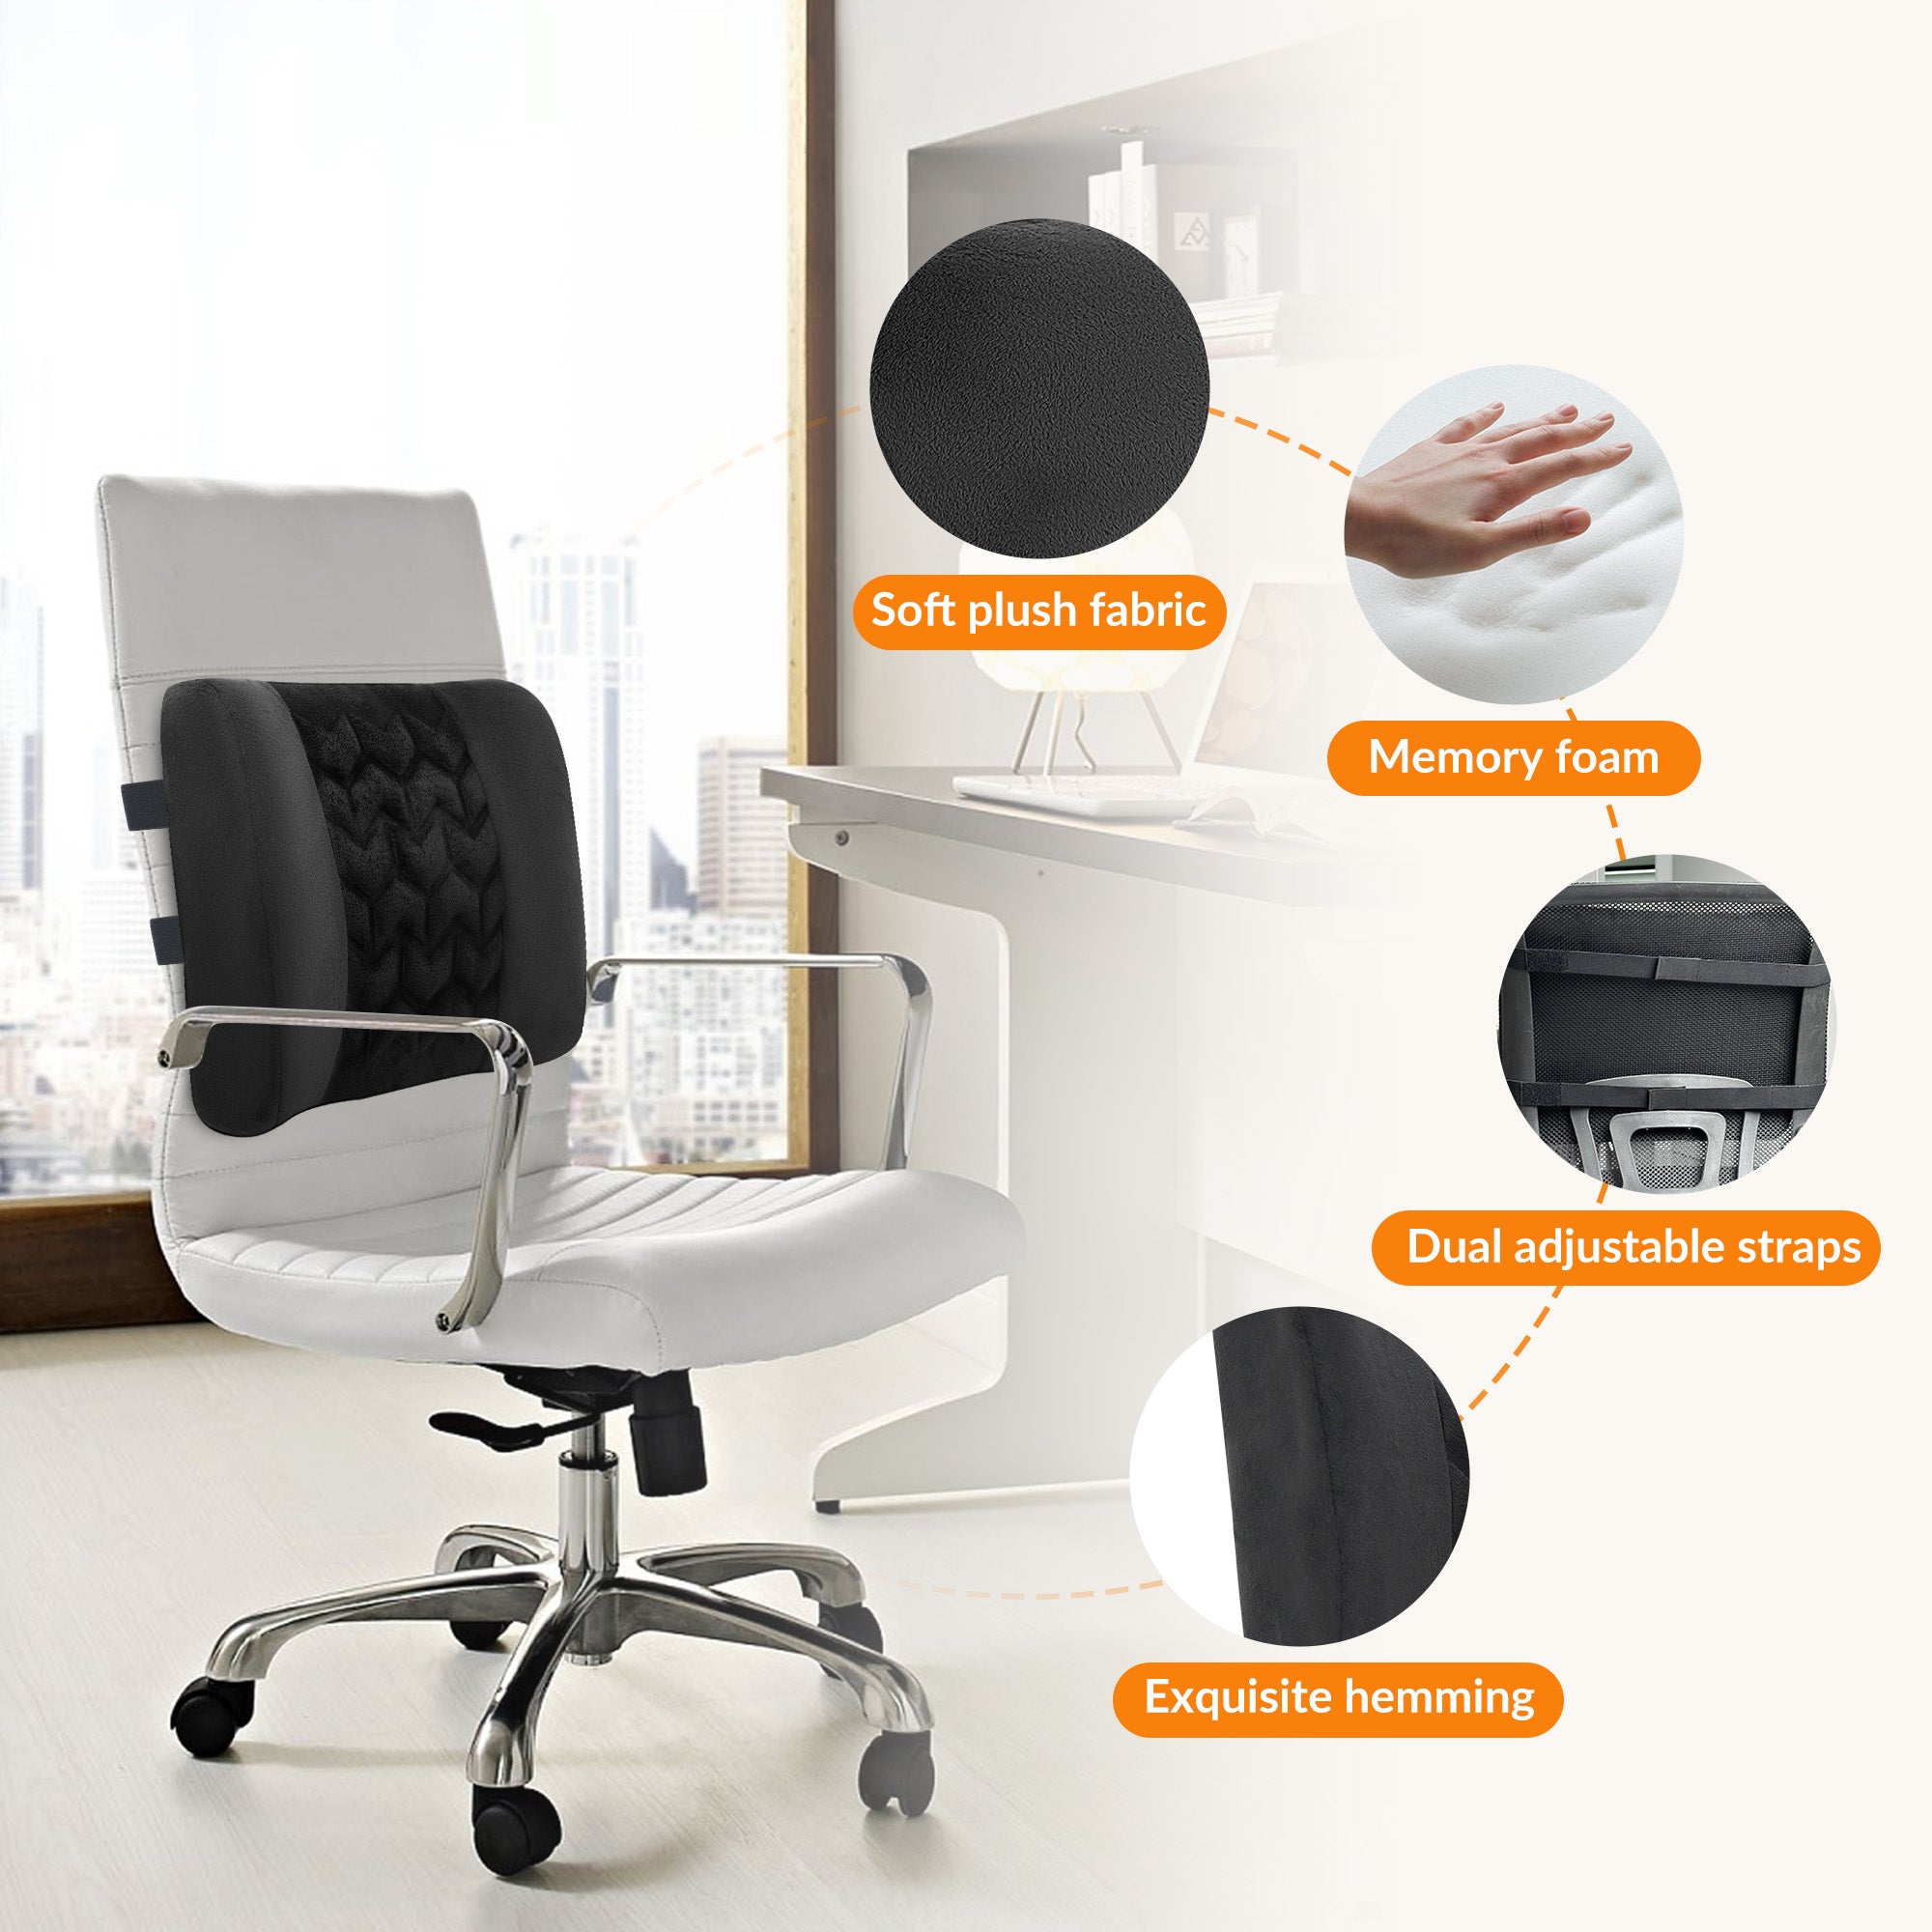 COMFIER Lumbar Back Support Pillow for Office Chair, Lumbar Pillow with 3  Vibration Modes & 2 Heat Level, Memory Foam,Lumbar Support for Car,Office